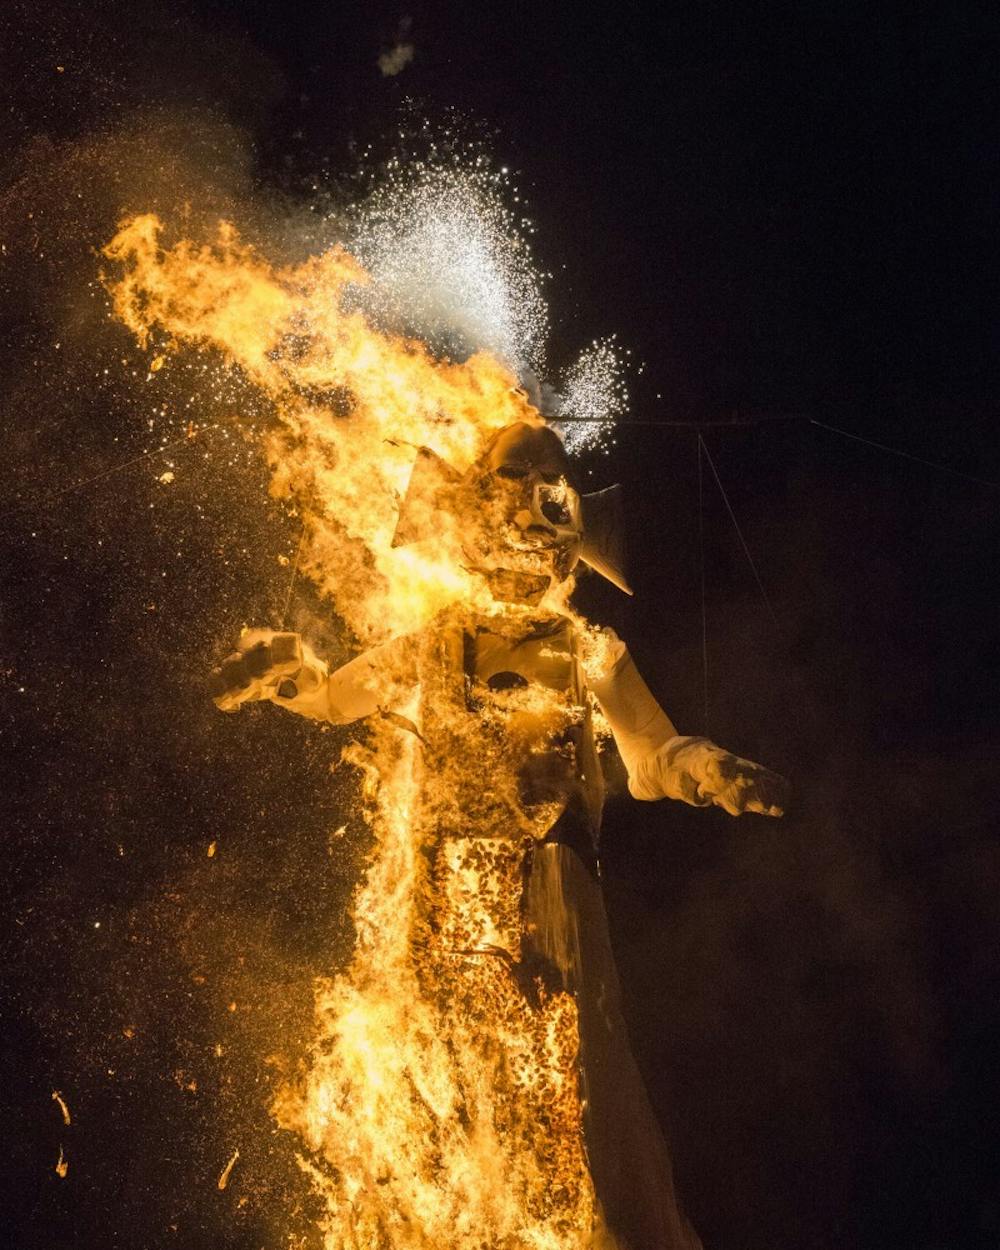 Photo taken during the 2015 Burning of the Zozobra.